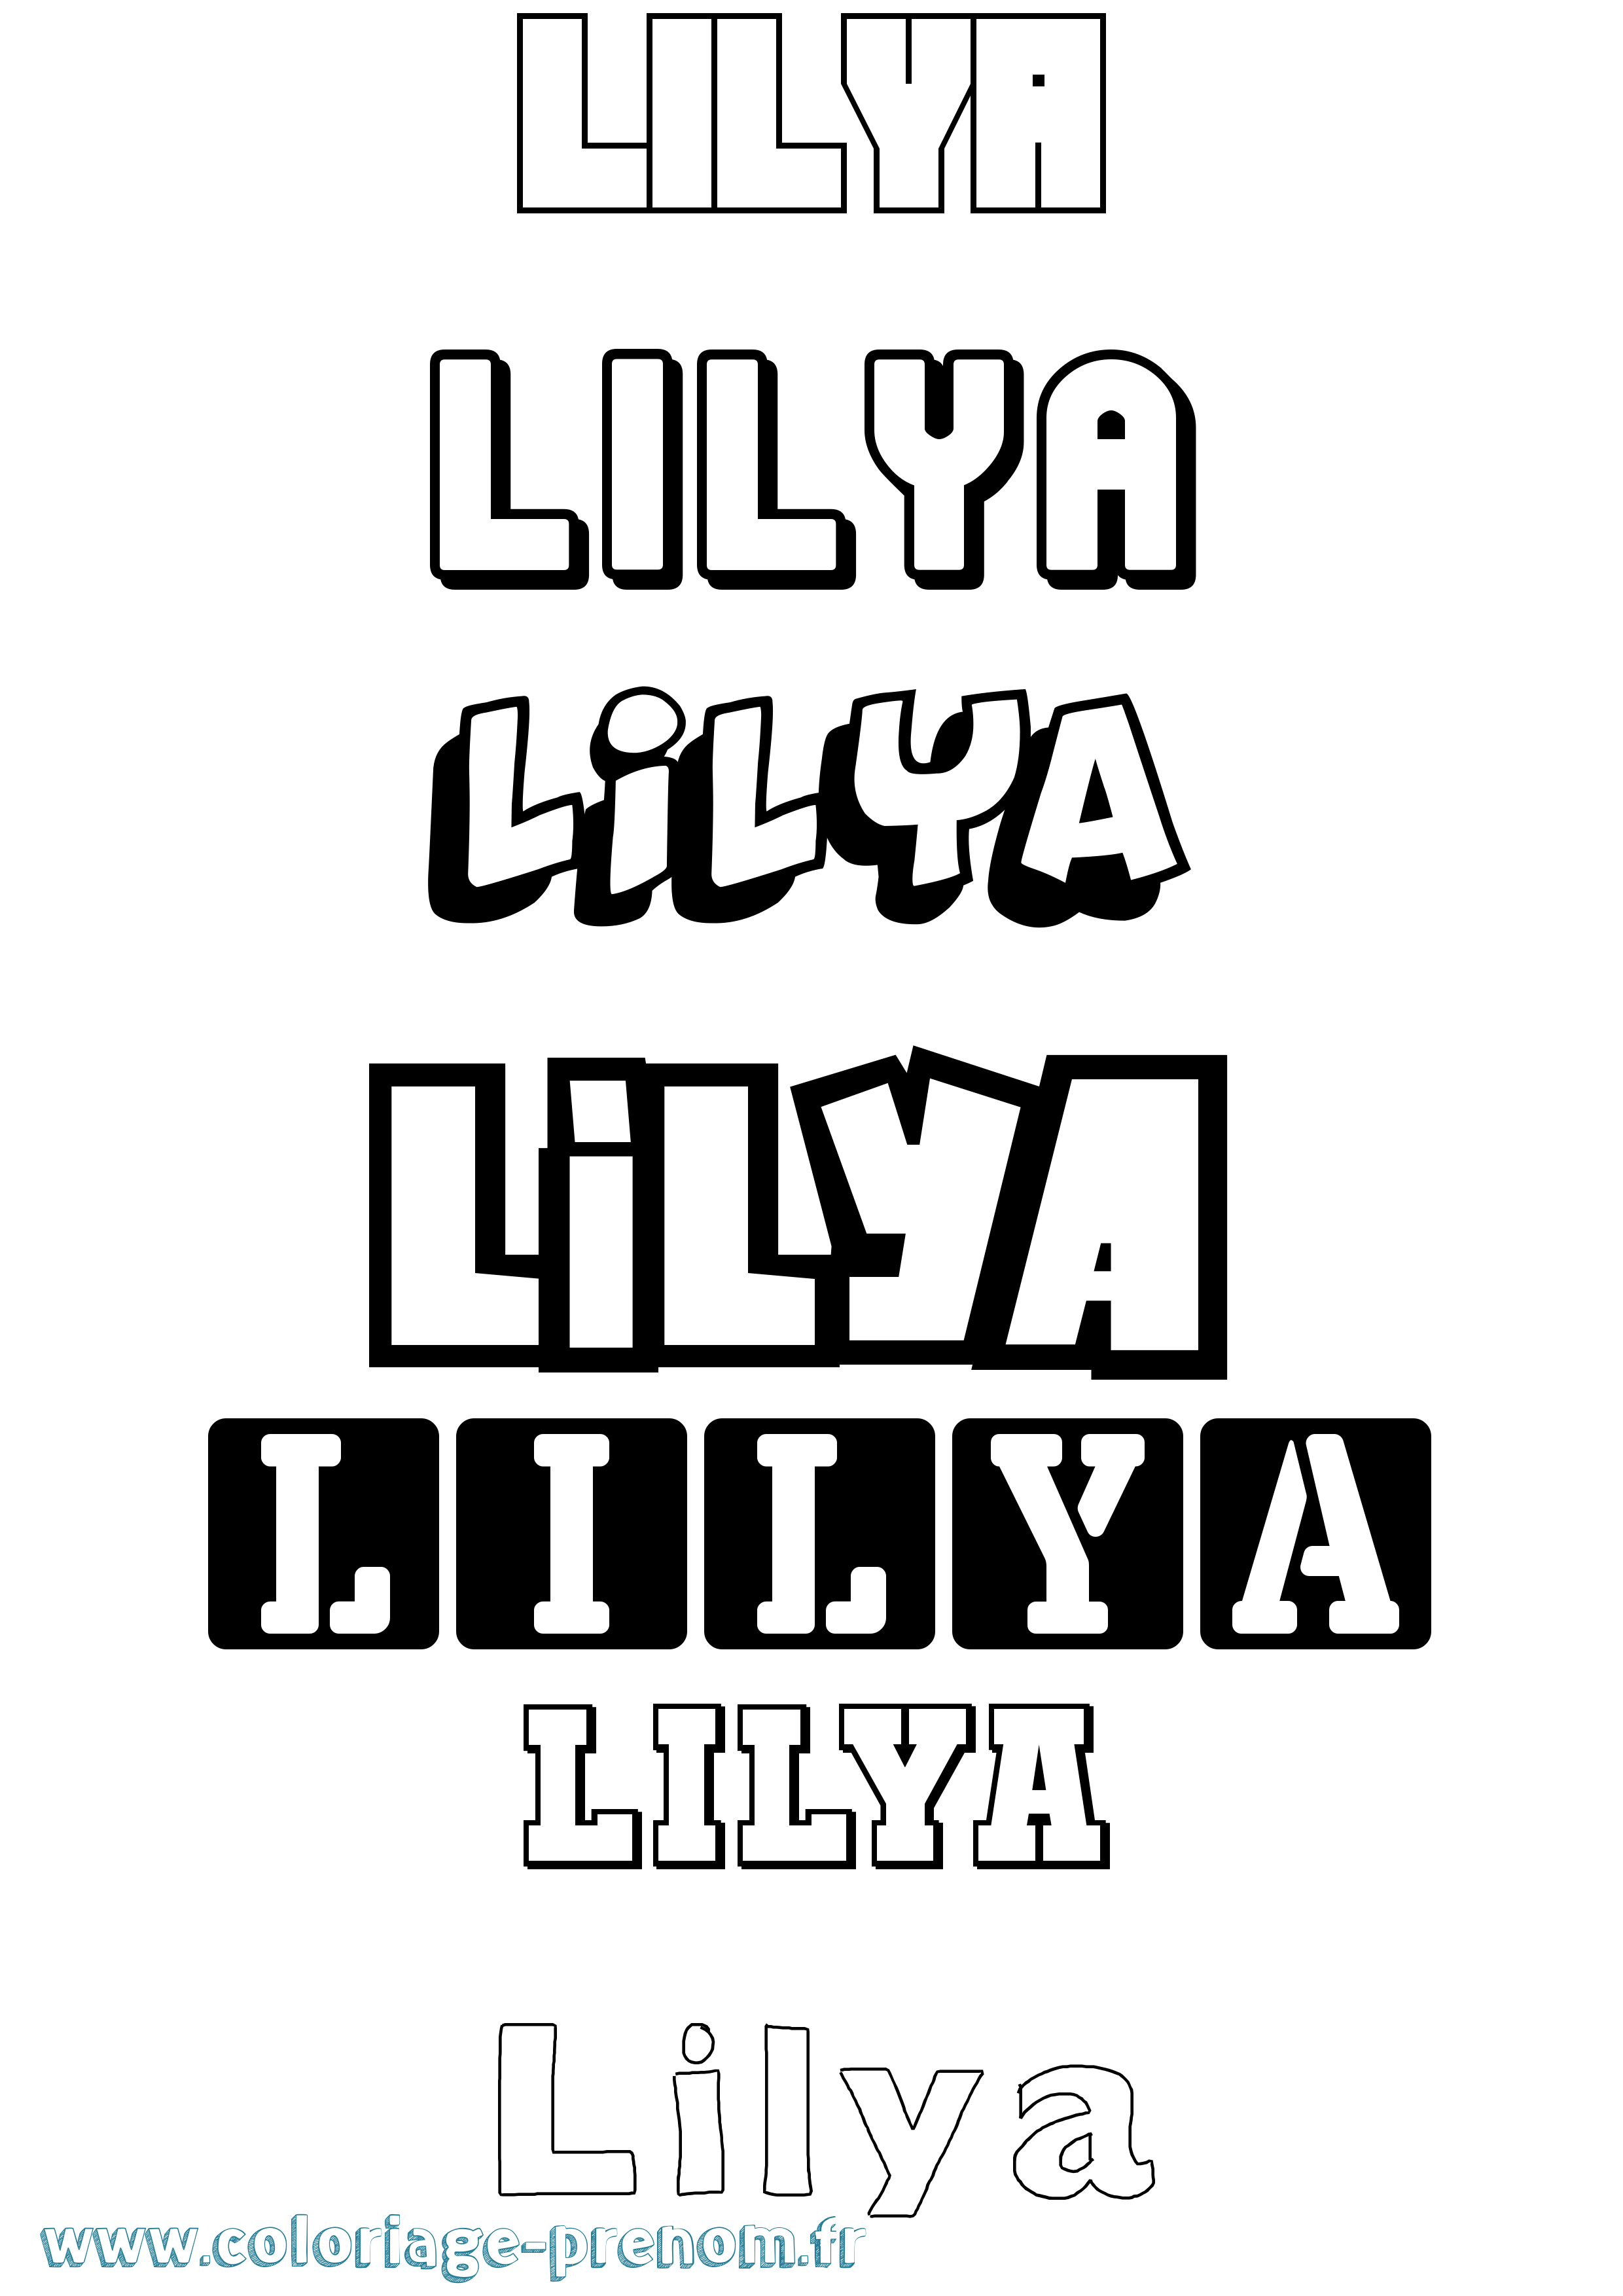 Coloriage prénom Lilya Simple